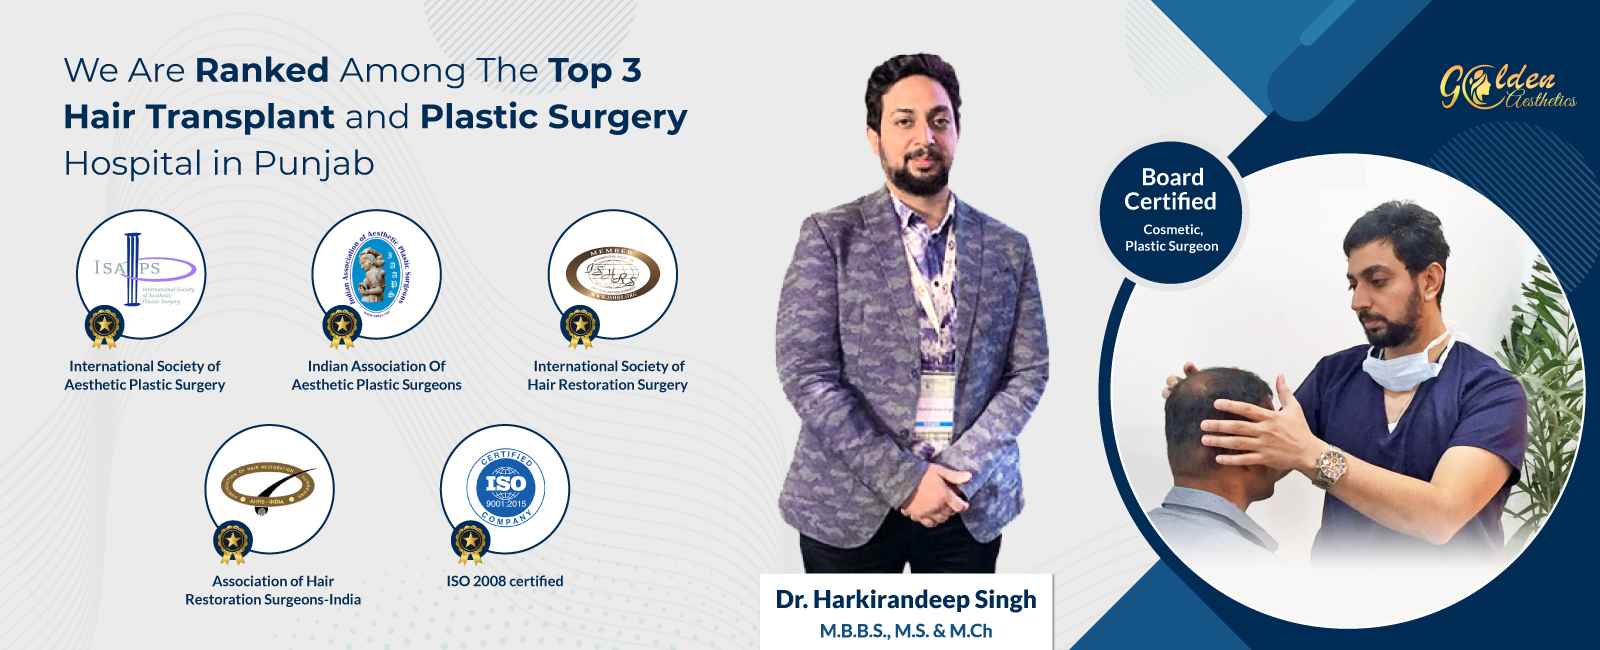 Dr Tanreets Skin Hair  Laser Center in AmritsarAmritsar  Book  Appointment Online  Best Dermatologists in Amritsar  Justdial